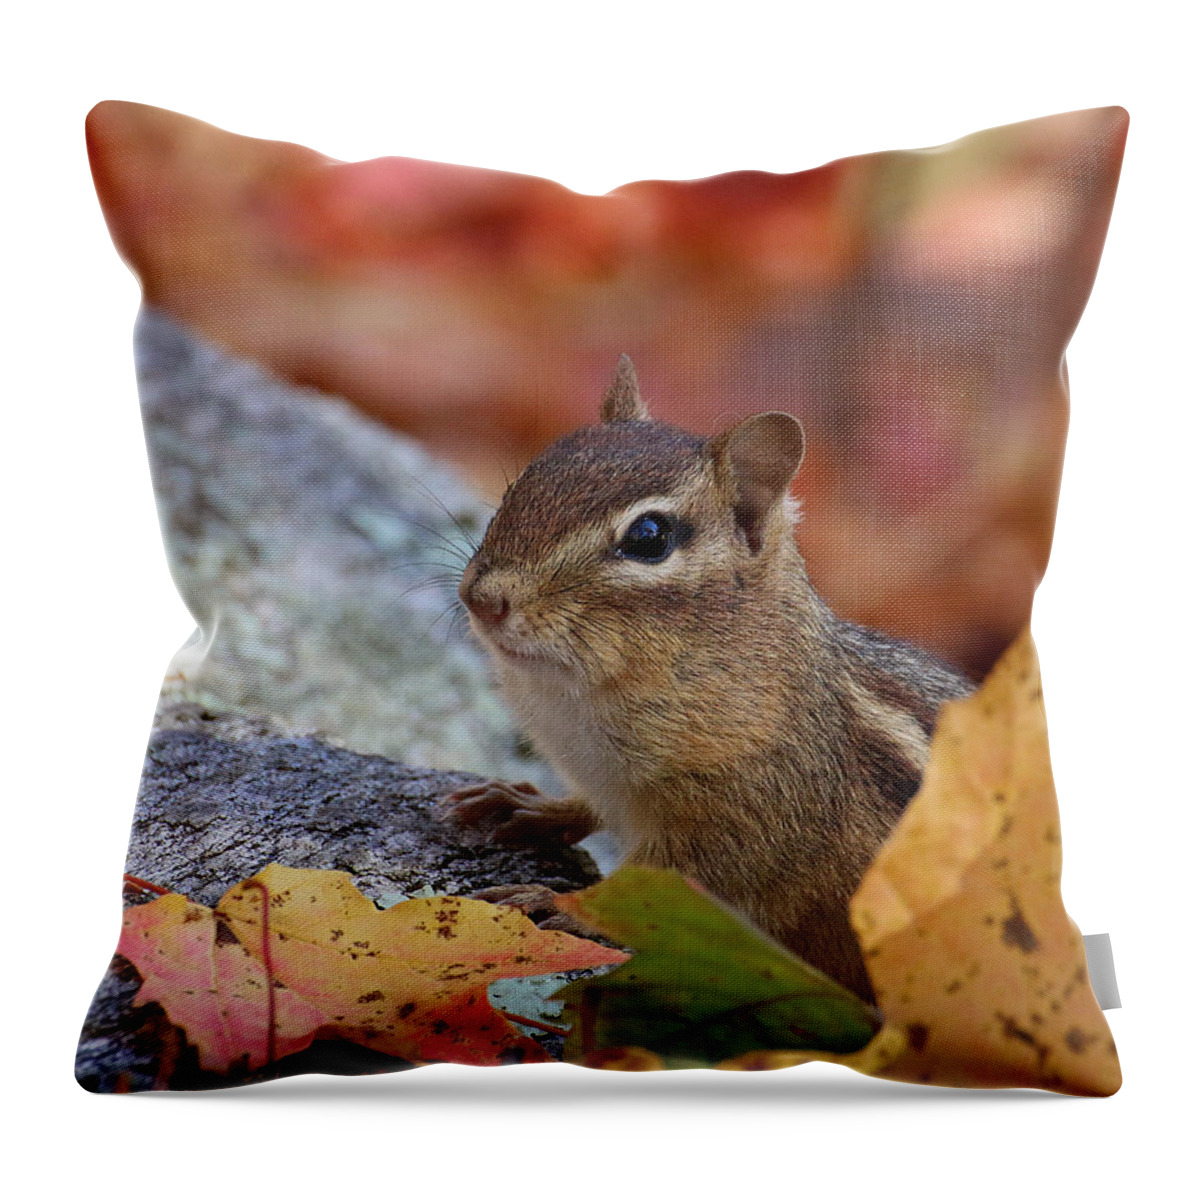 Wildlife Throw Pillow featuring the photograph Autumn Chipmunk by William Selander